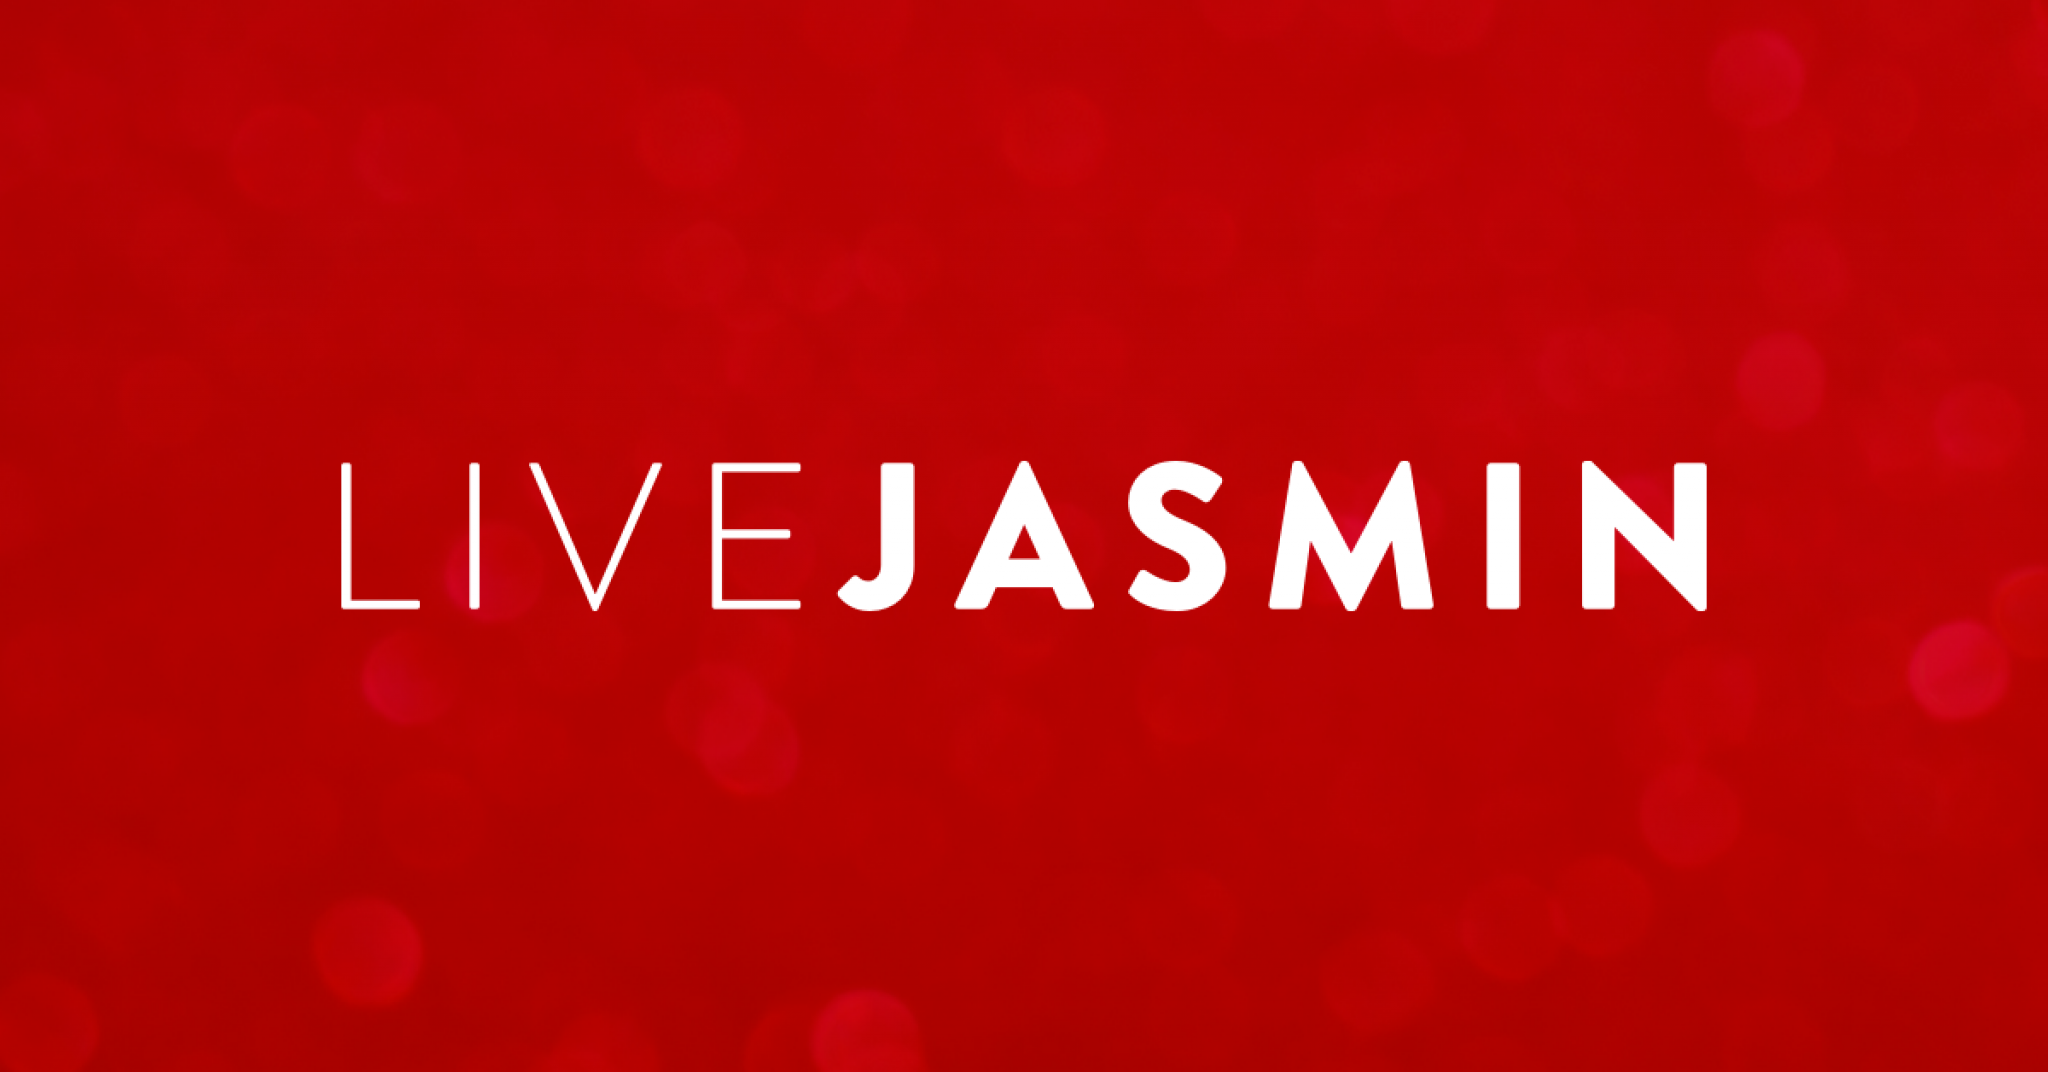 Live jasmin video